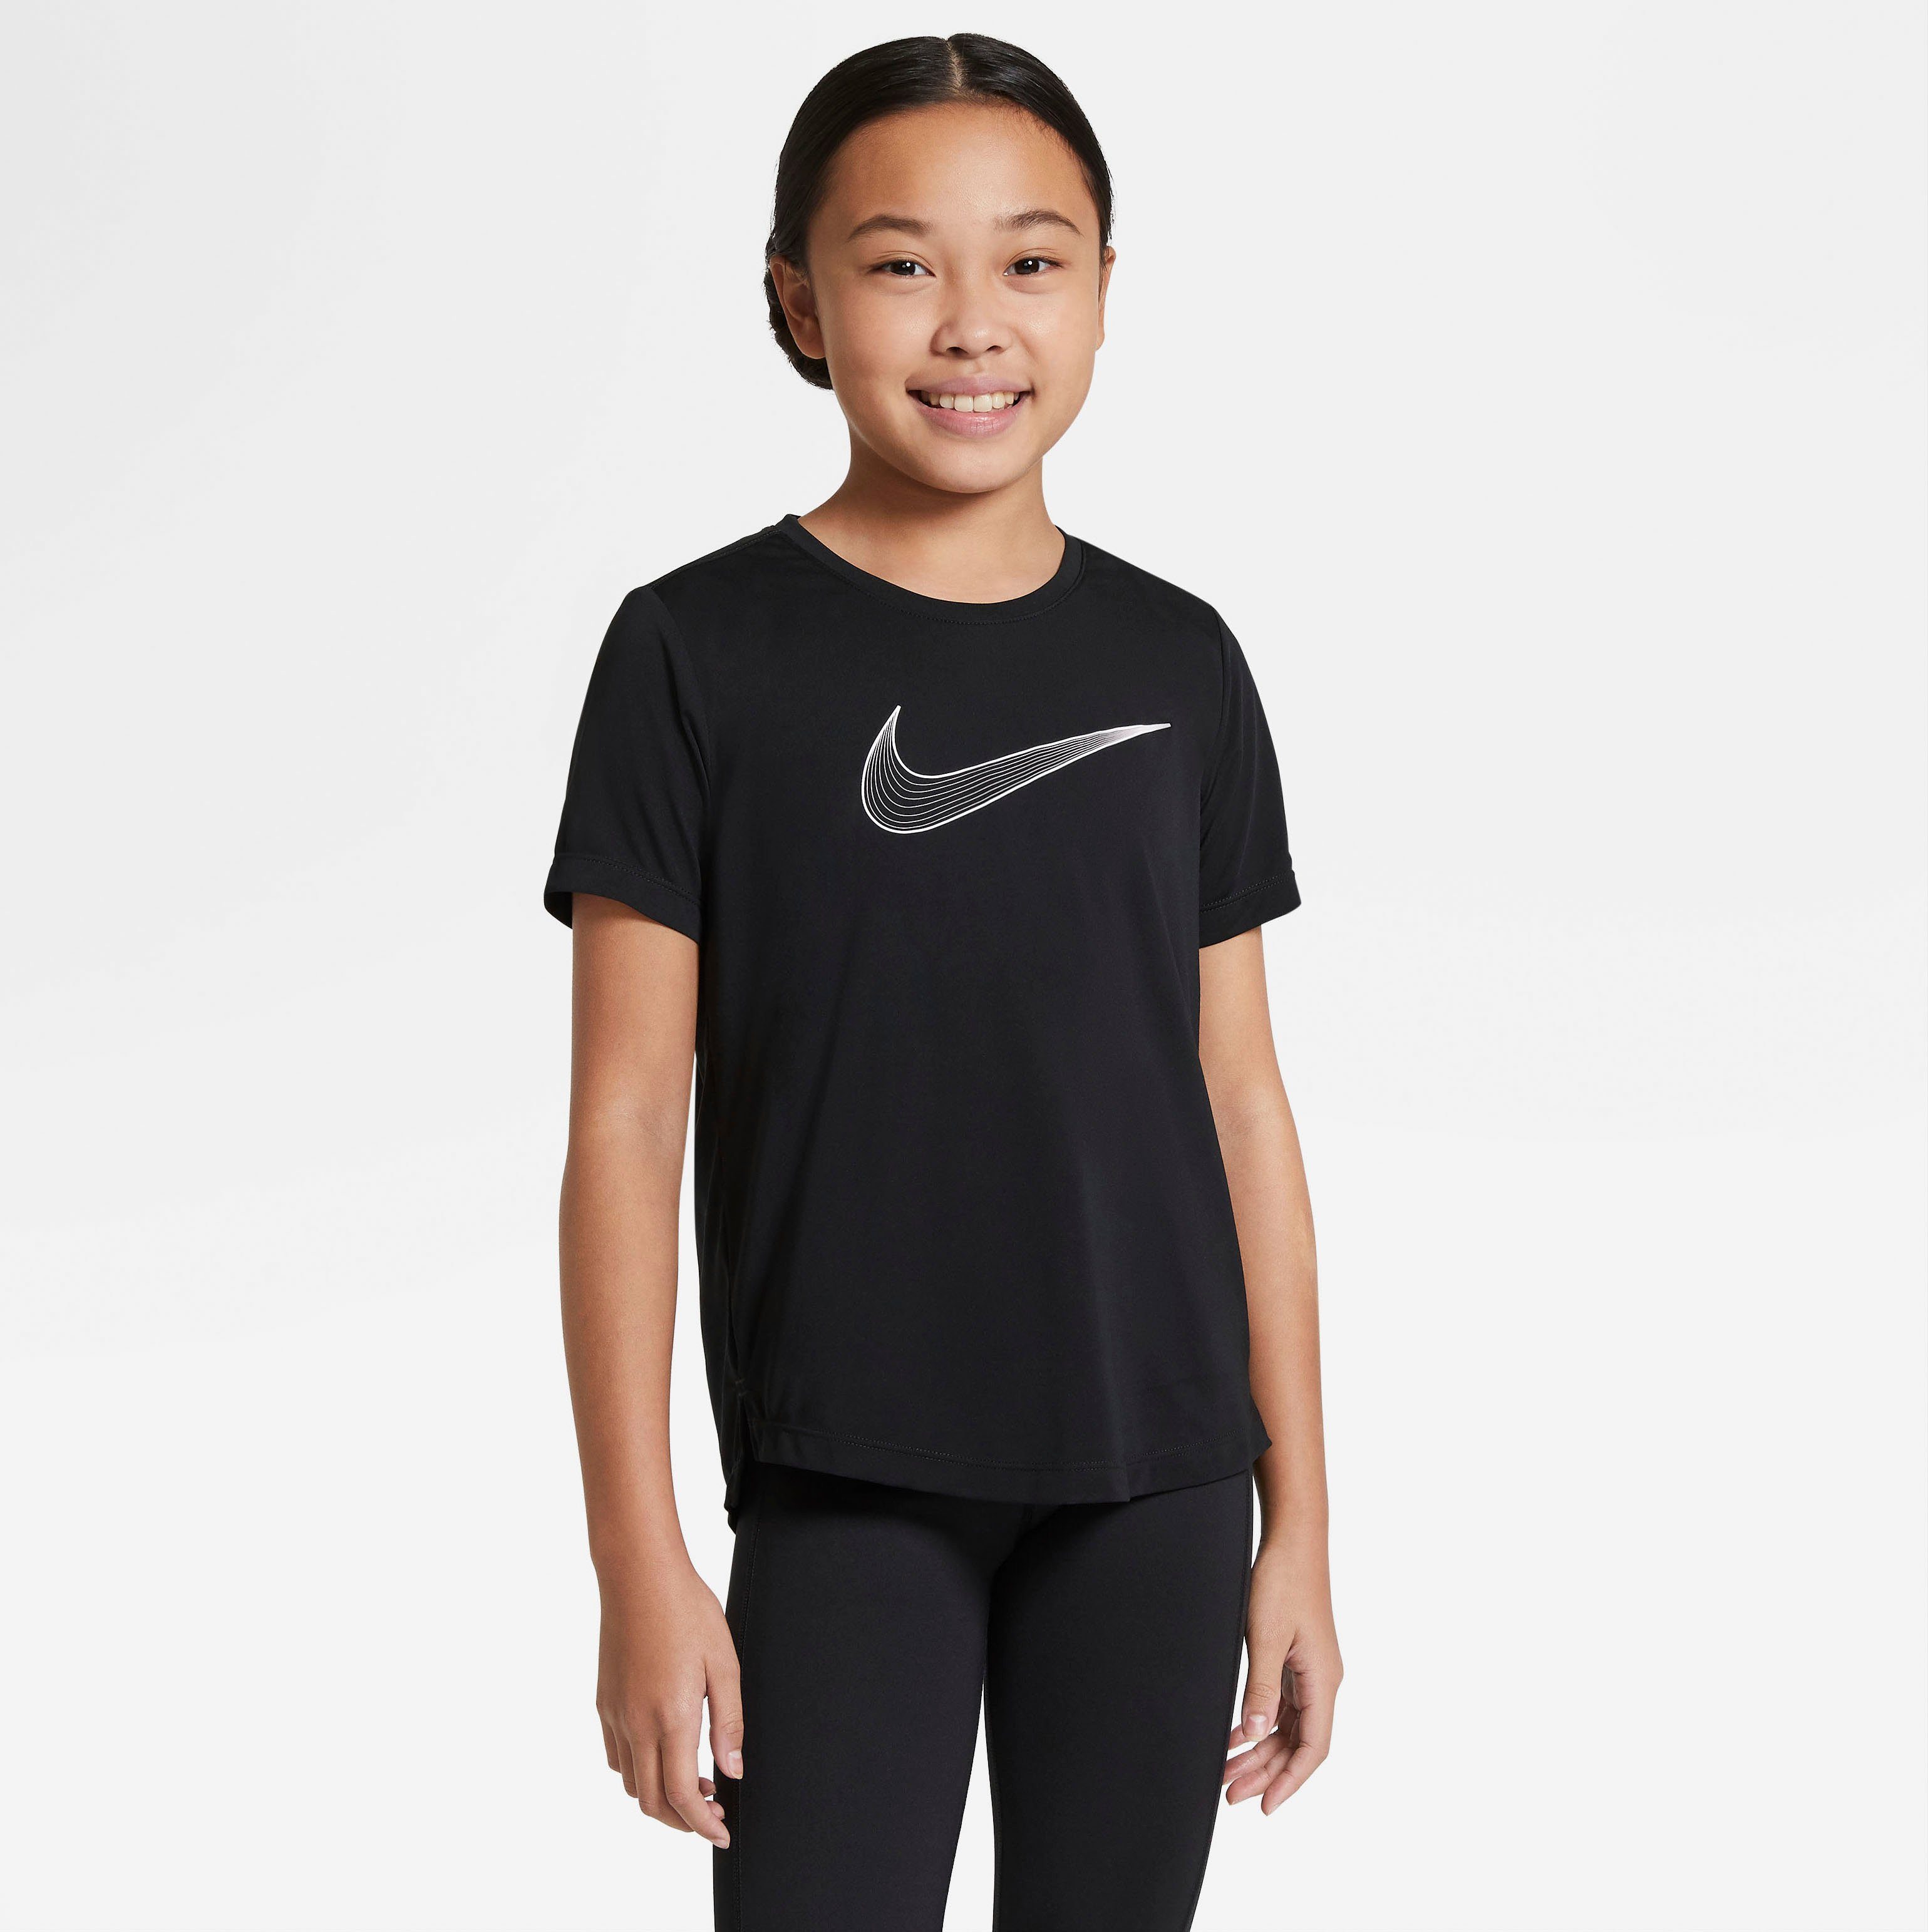 ONE TOP TRAINING Trainingsshirt (GIRLS) SHORT-SLEEVE schwarz KIDS' BIG DRI-FIT Nike